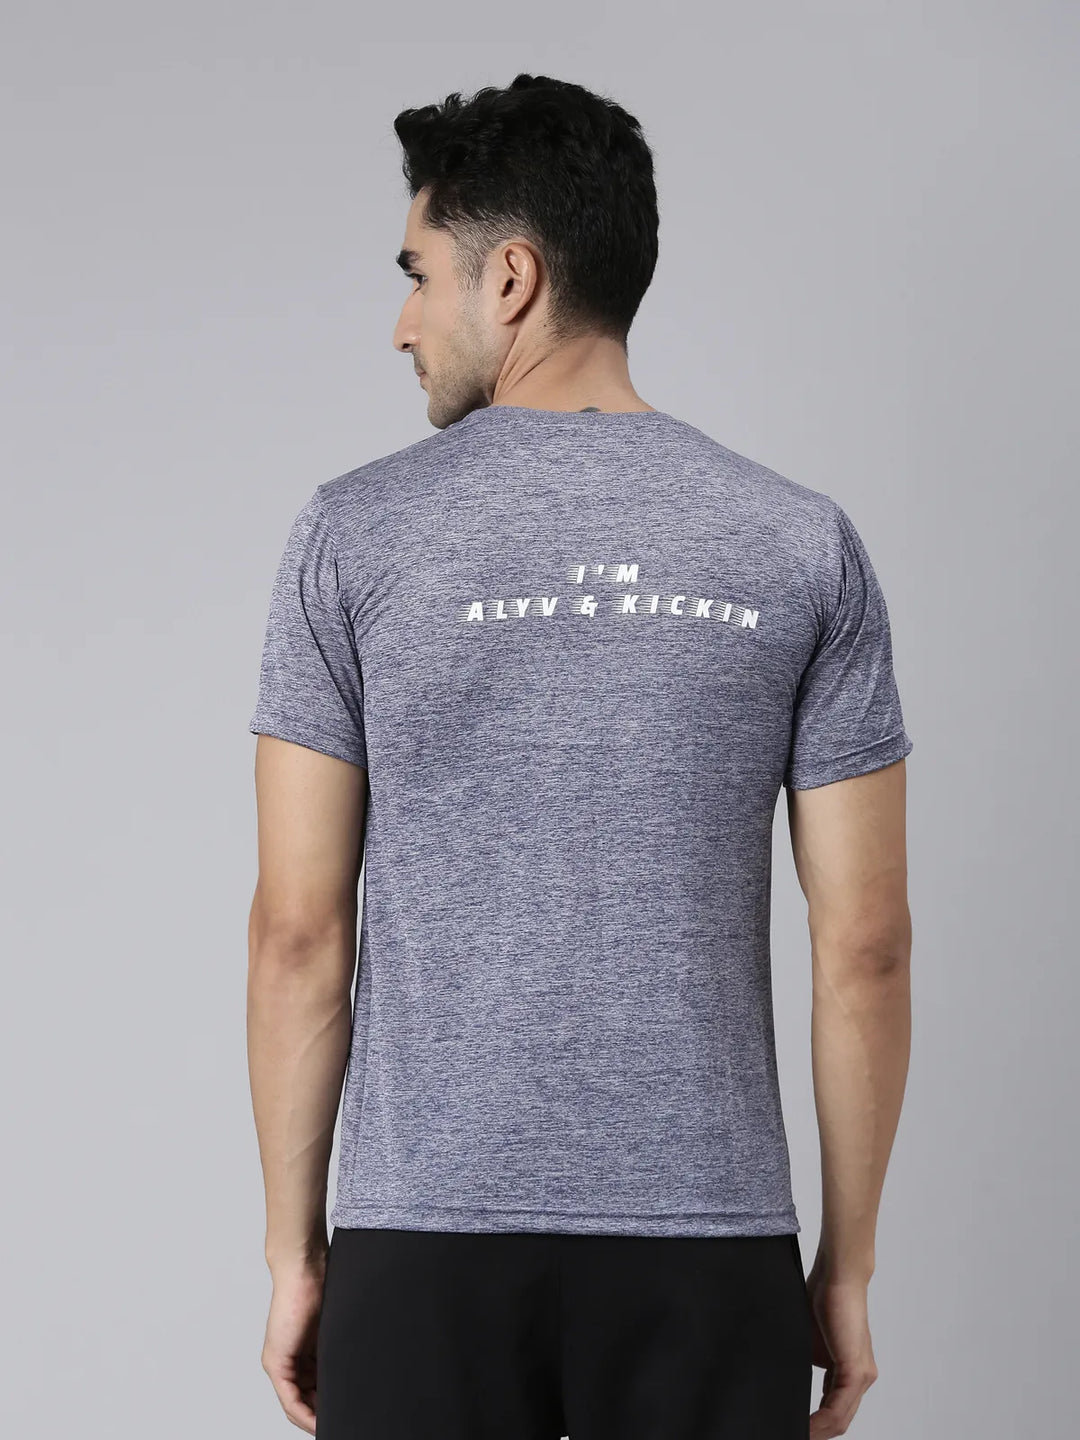 Men’s Max Performance Dry Fit T-shirt (Navy)